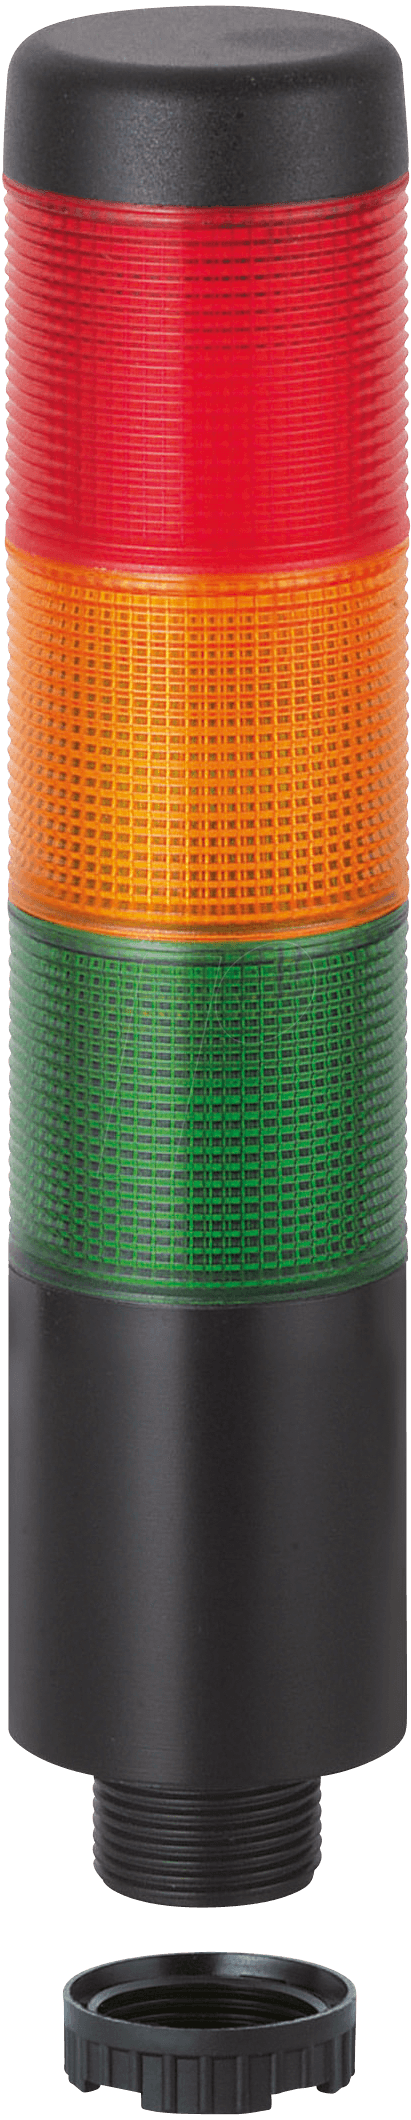 WERMA 699 210 75 - LED-Säule, gn/ge/rt, St, Sum, 24 V AC/DC von WERMA SIGNALTECHNIK